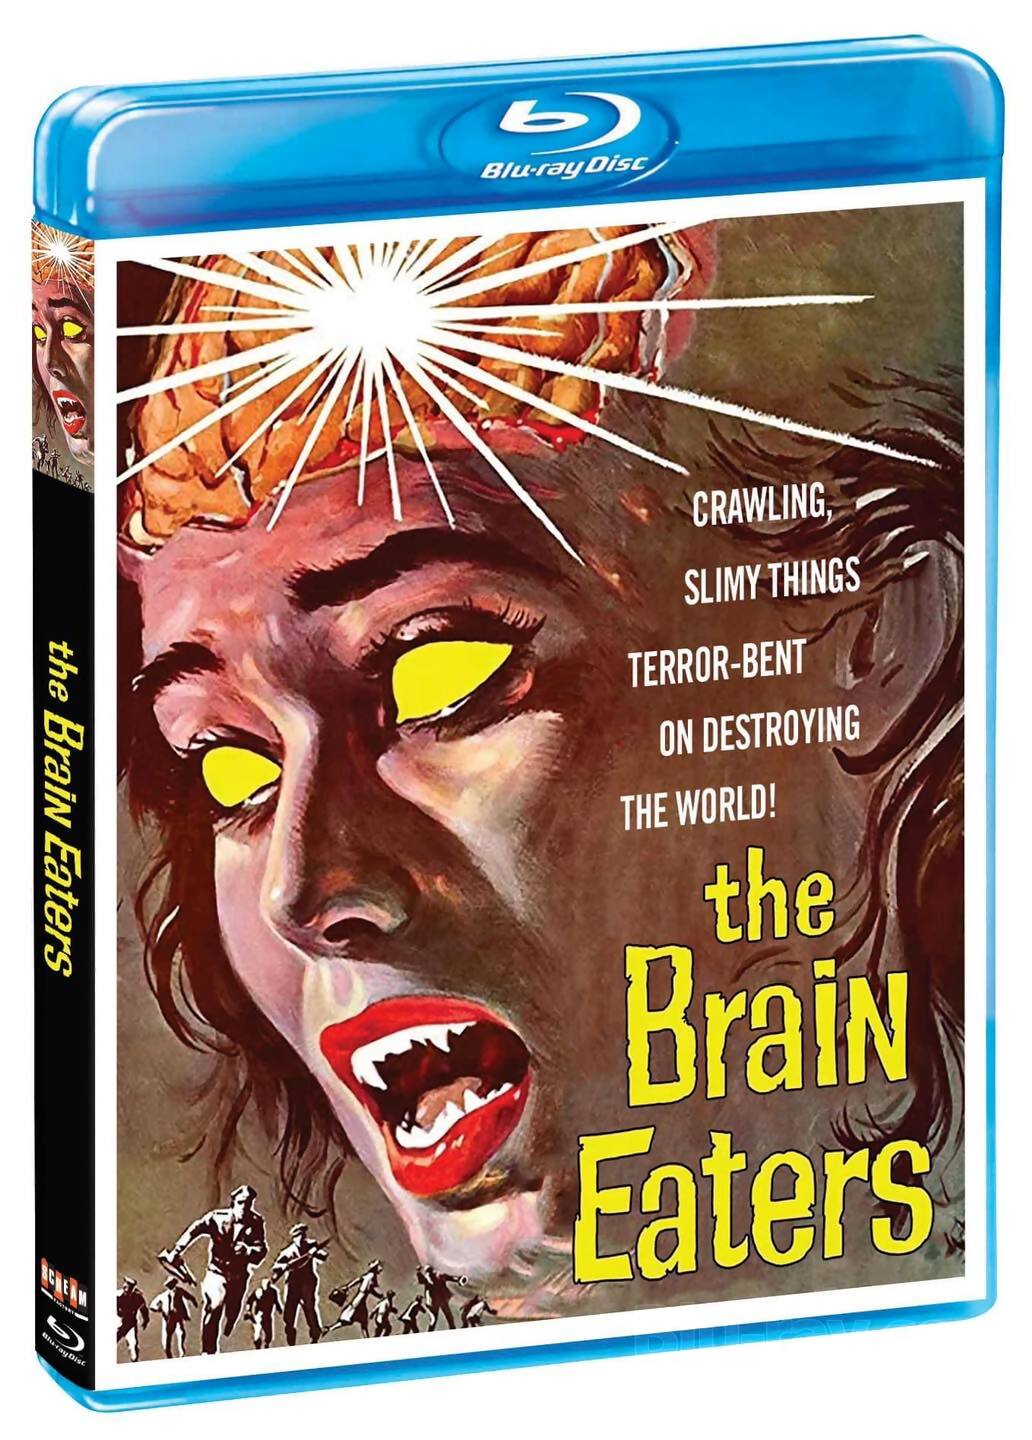 The Brain Blu-ray